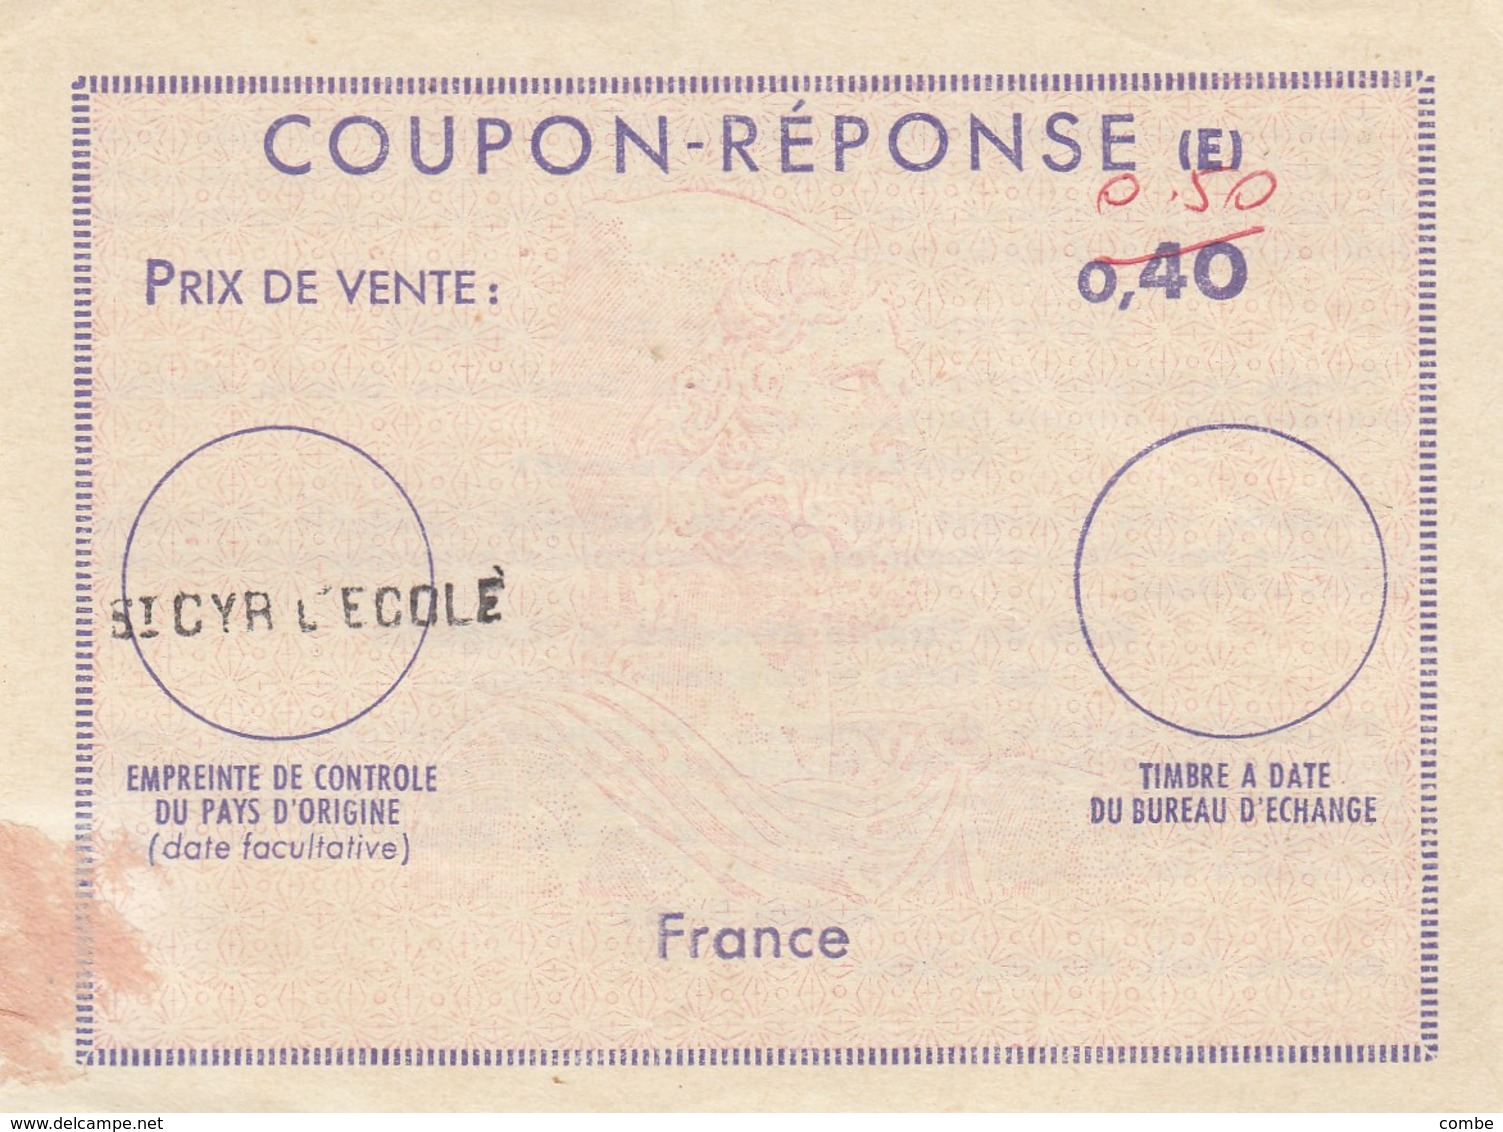 COUPON-REPONSE INTERNATIONAL. E. FRANCE. 0,40 FRANC RECTIFIE 0,50 FRANC . ST CYR-L'ECOLE      / 2 - Antwortscheine